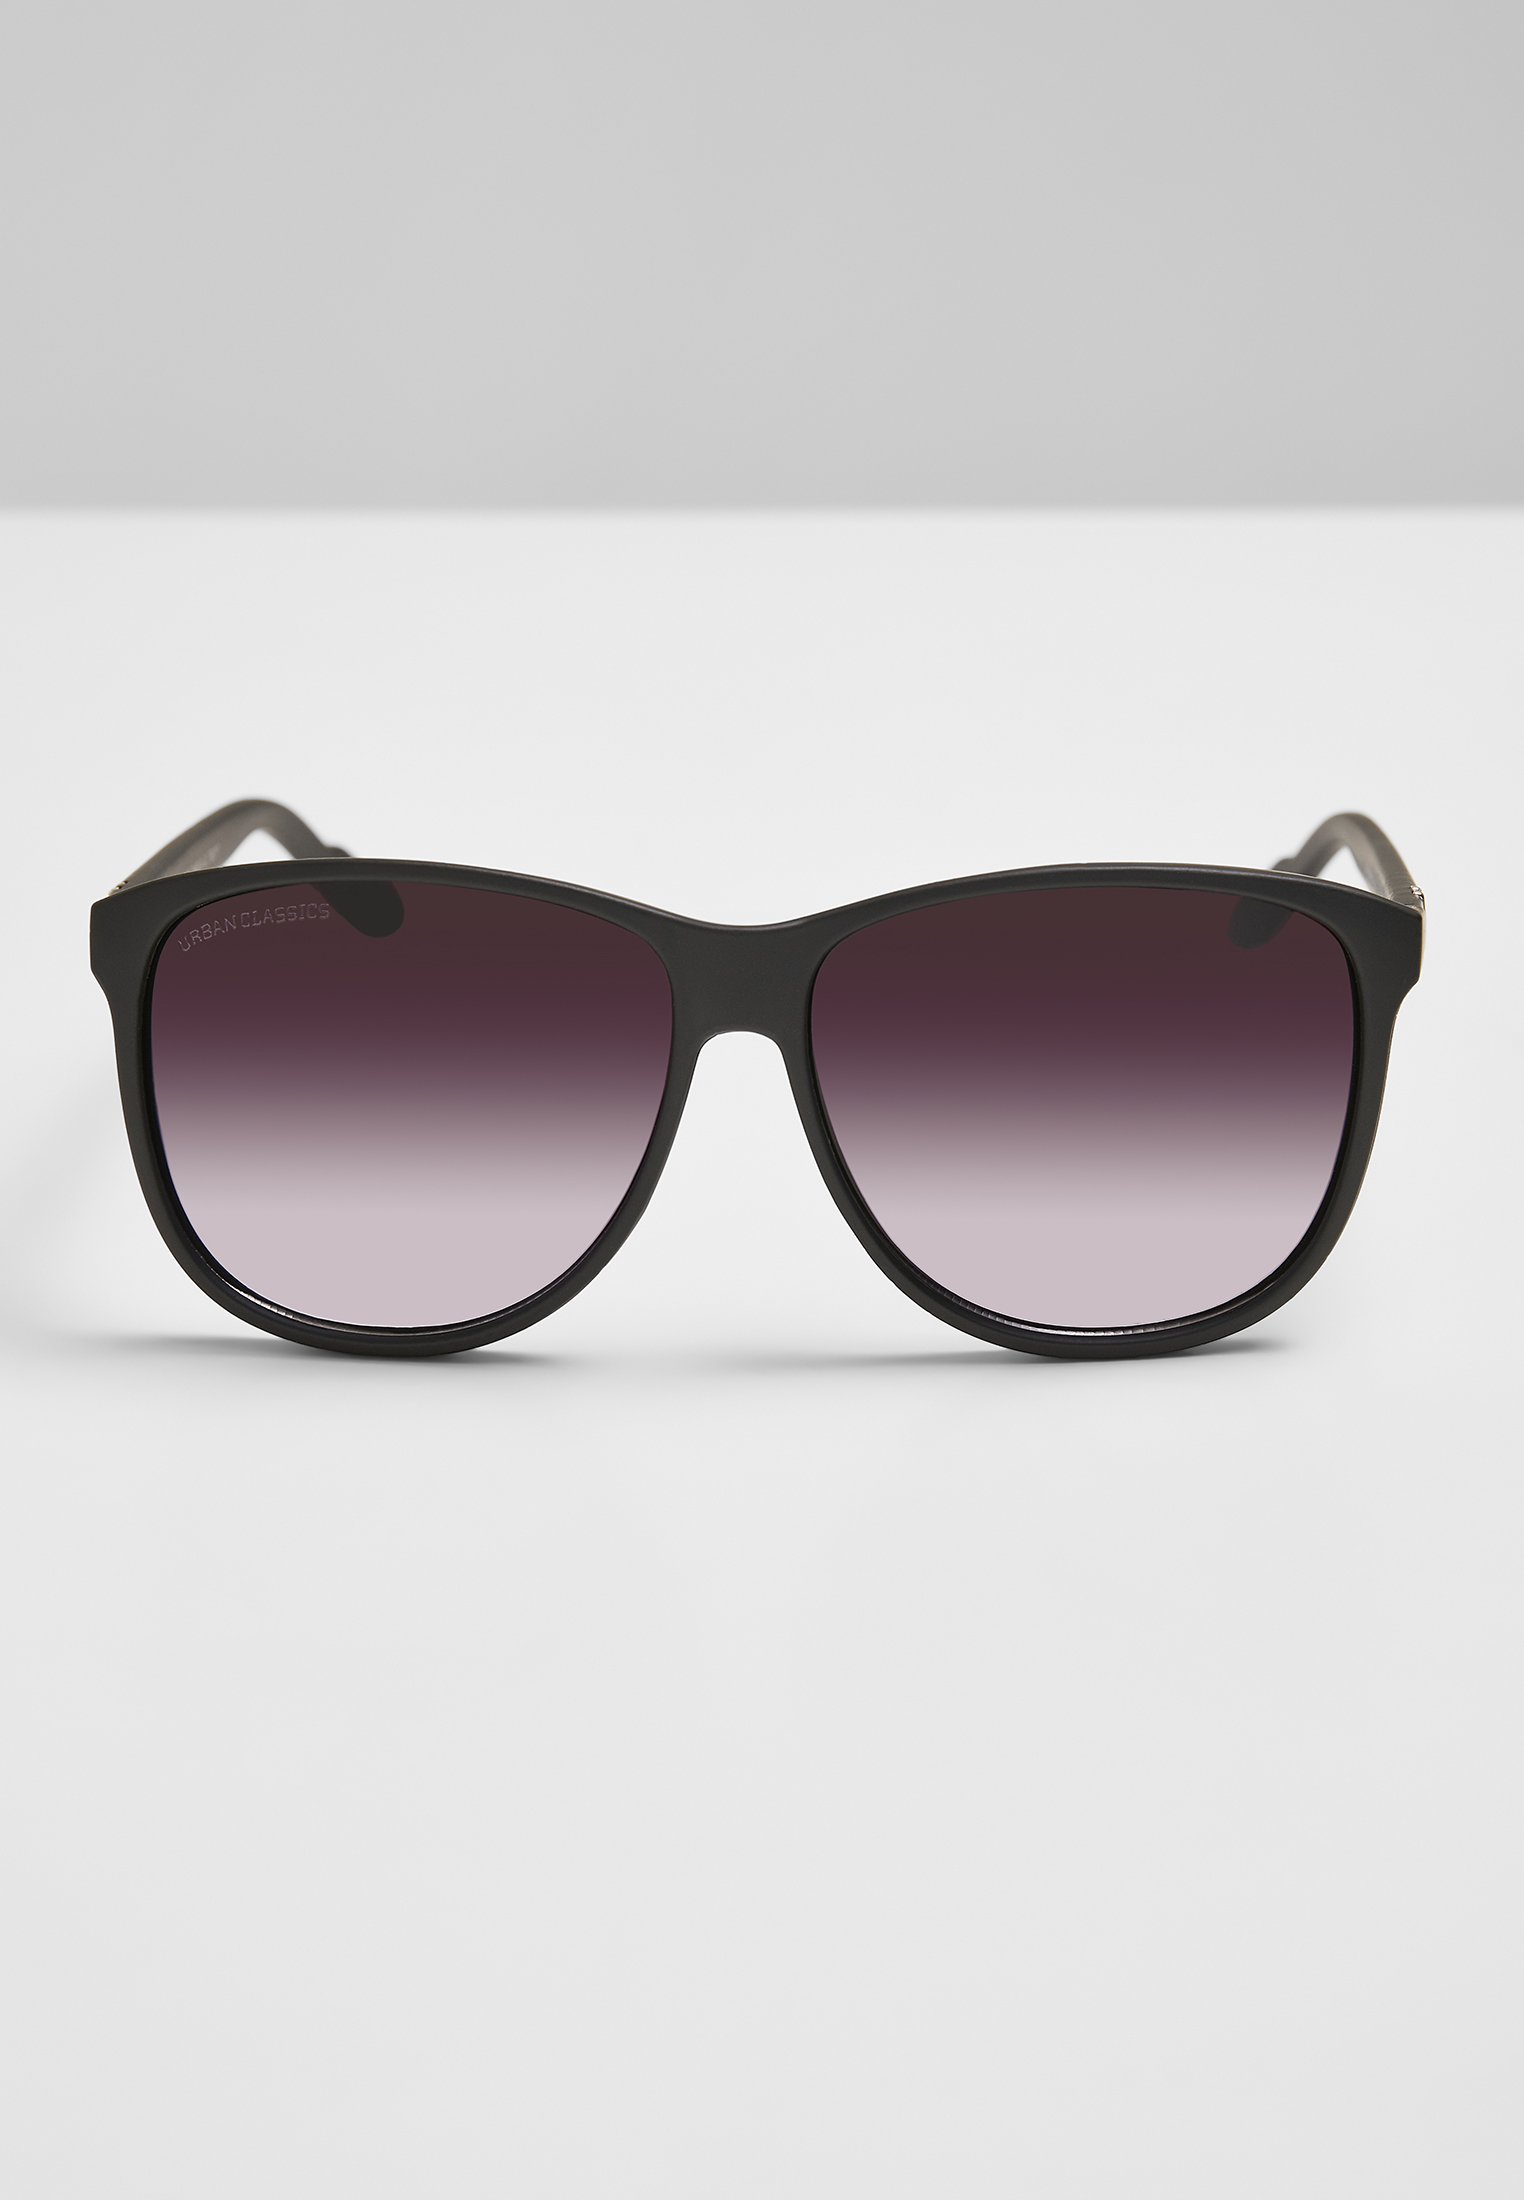 Sonnenbrillen Sunglasses Chirwa UC in Farbe black